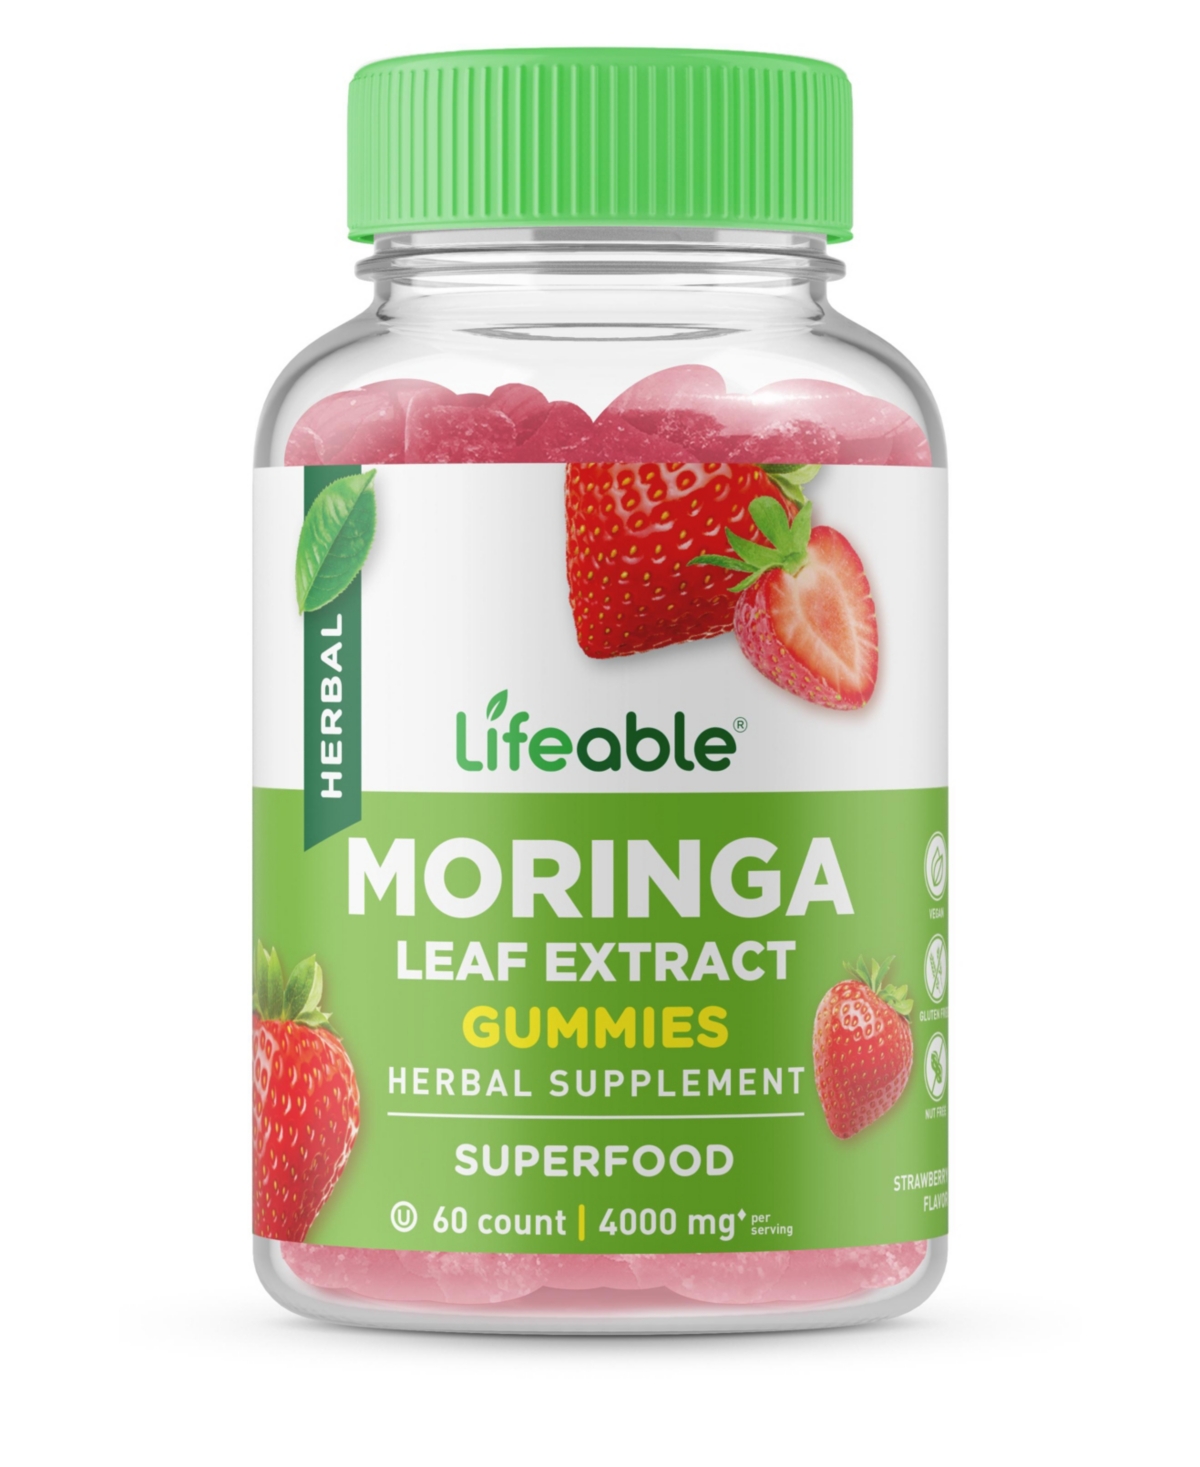 Moringa Leaf Extract 4,000 mg Gummies - Superfood Immunity Boost - Great Tasting Natural Flavor, Herbal Supplement Vitamins - 60 Gummies - Op